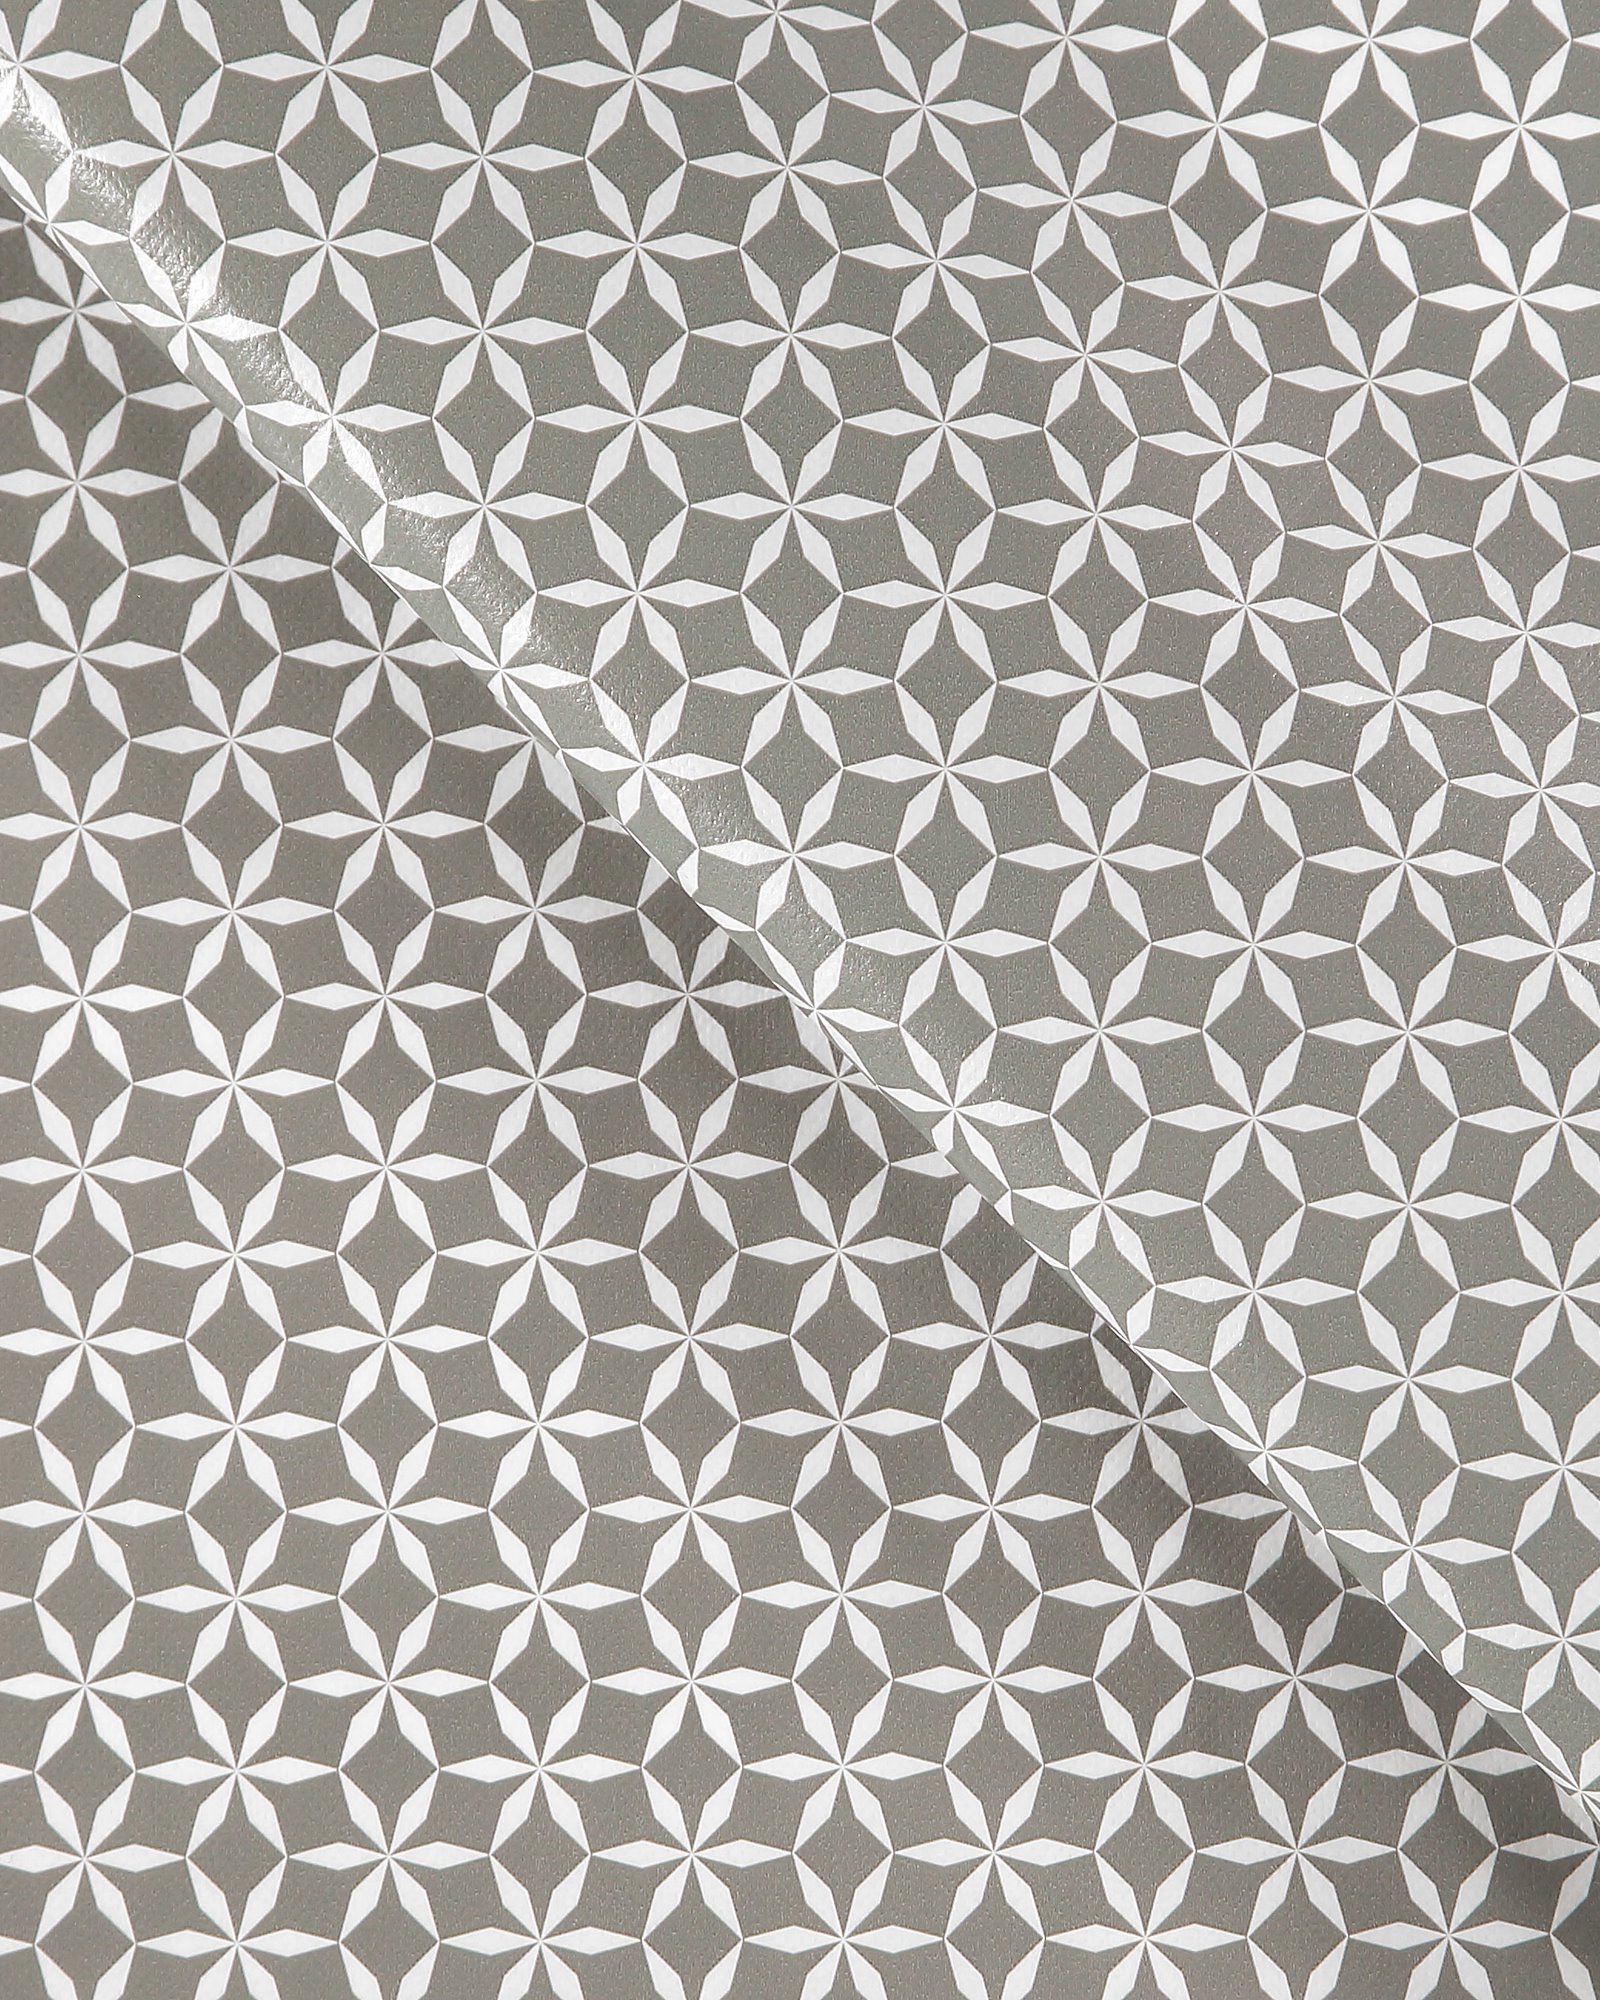 Non-woven oilcloth gray w origami star 866139_pack